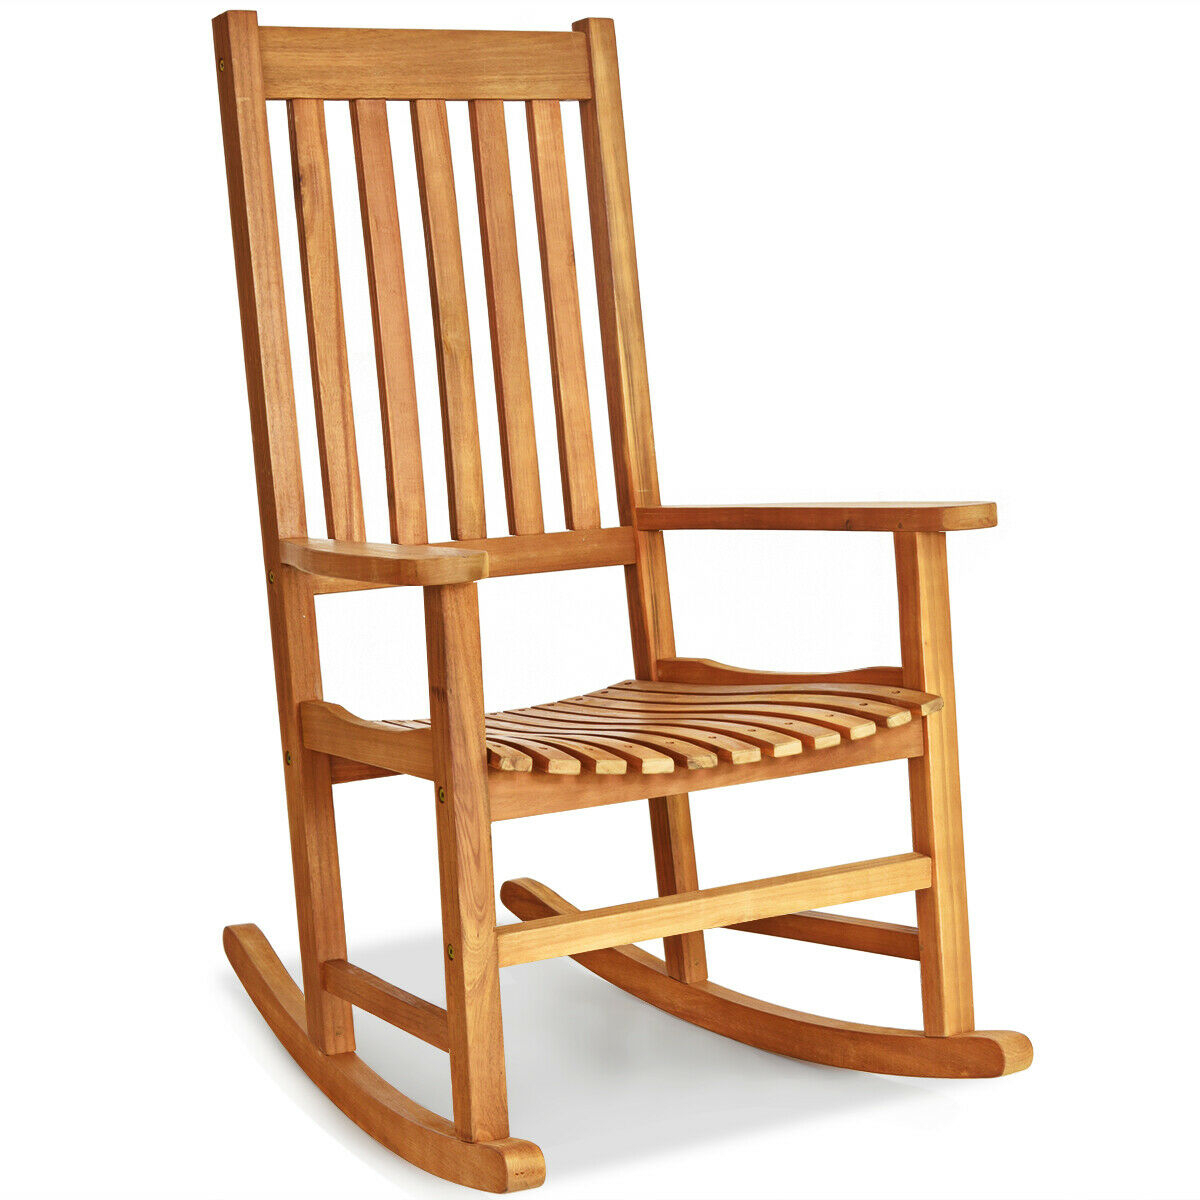 Wooden Rocking Chair Porch Rocker High Back Garden Seat For Indoor Outdoor - Teak